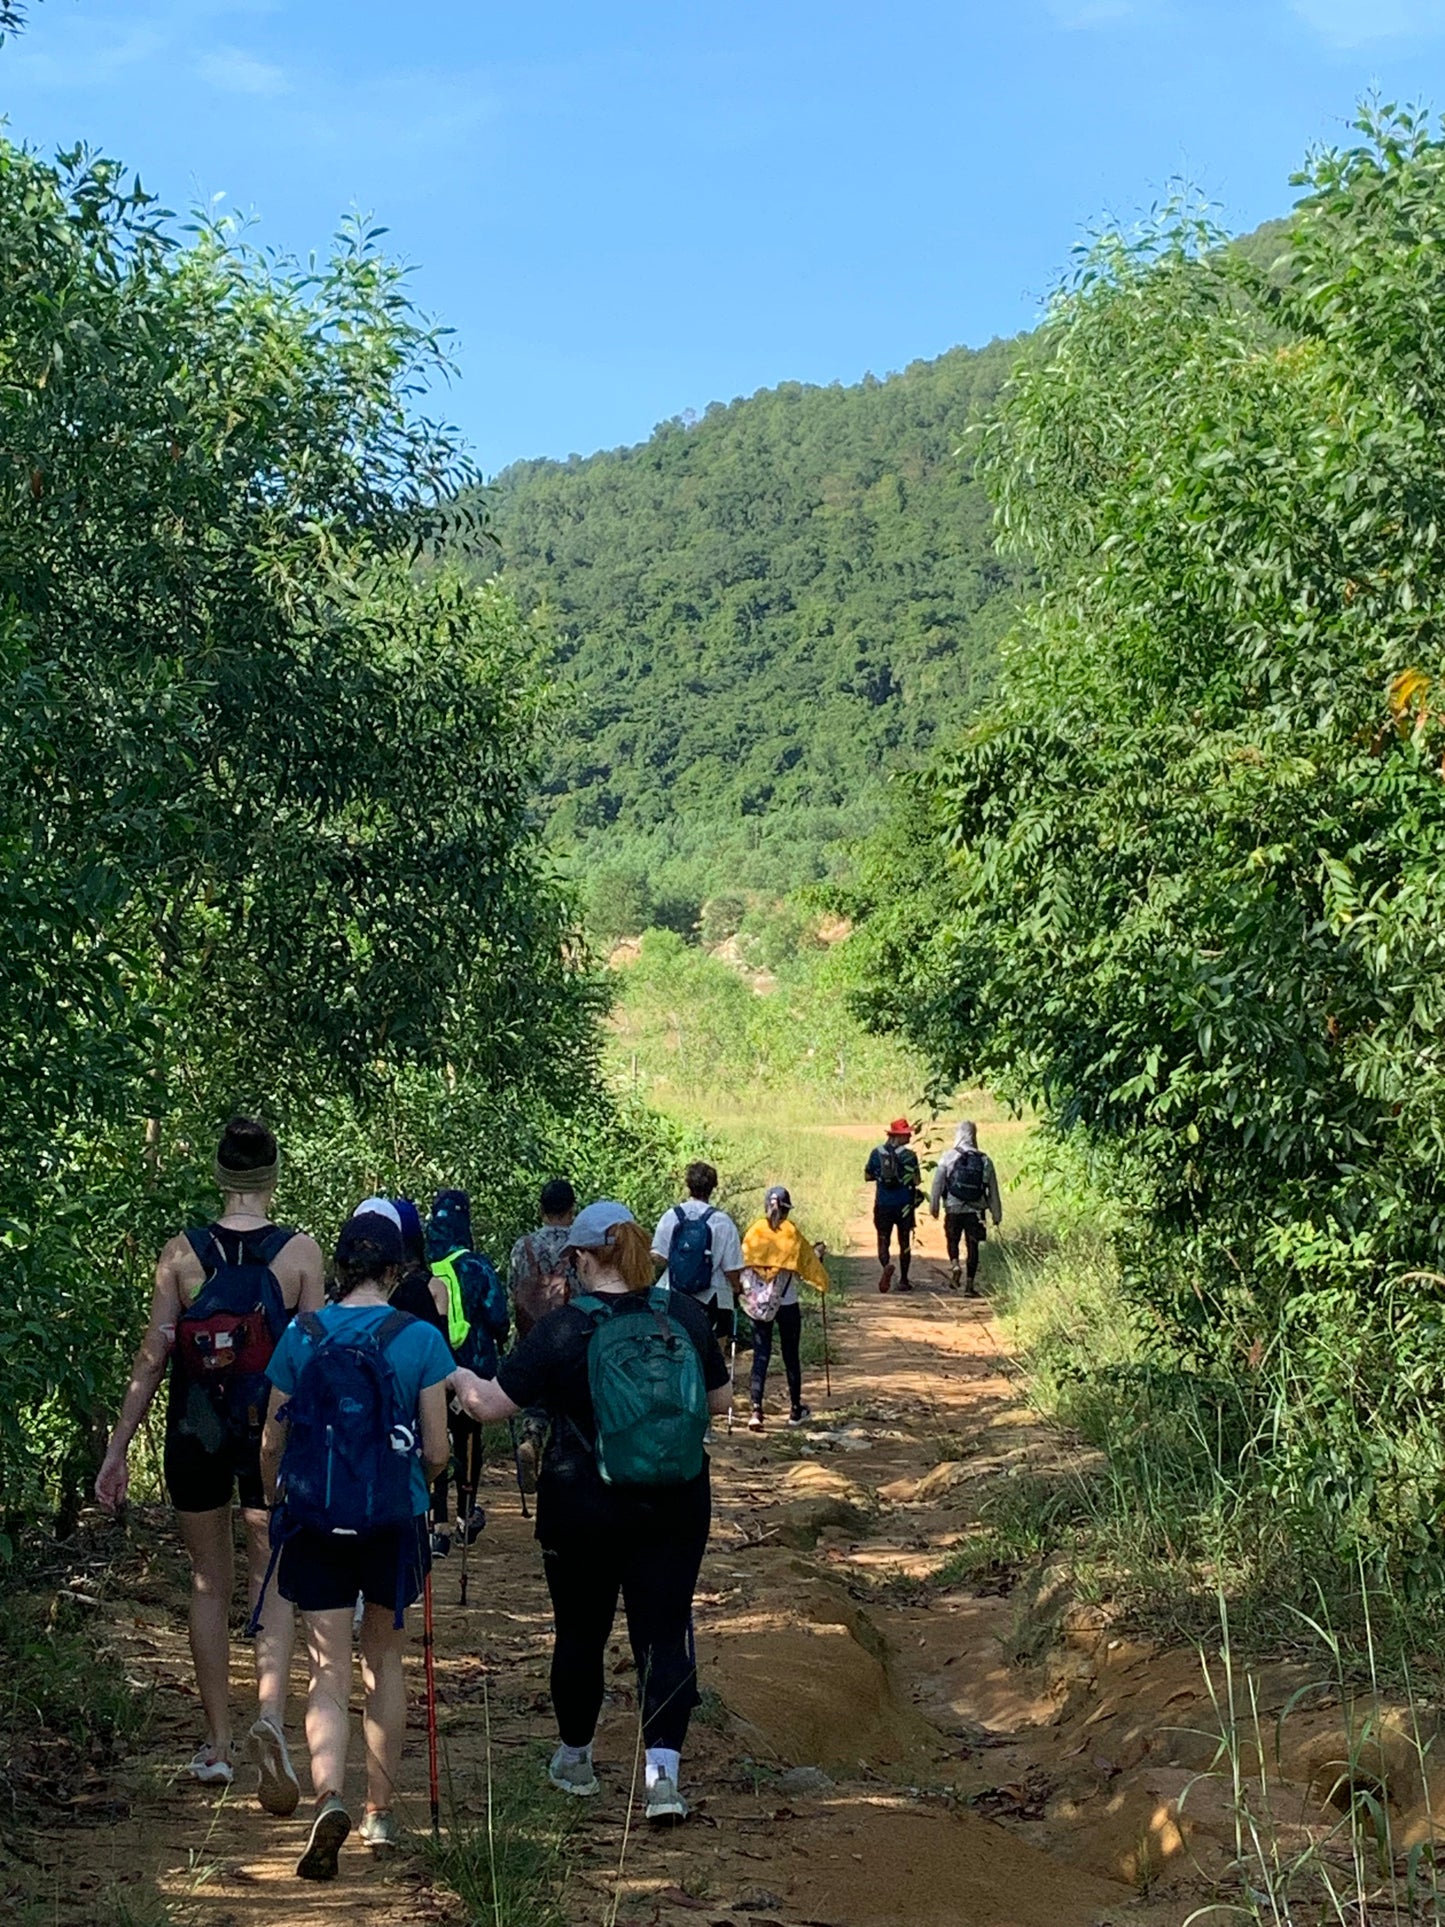 86A2: Caminata por dos picos entre senderos de bambú con impresionantes vistas de la cumbre